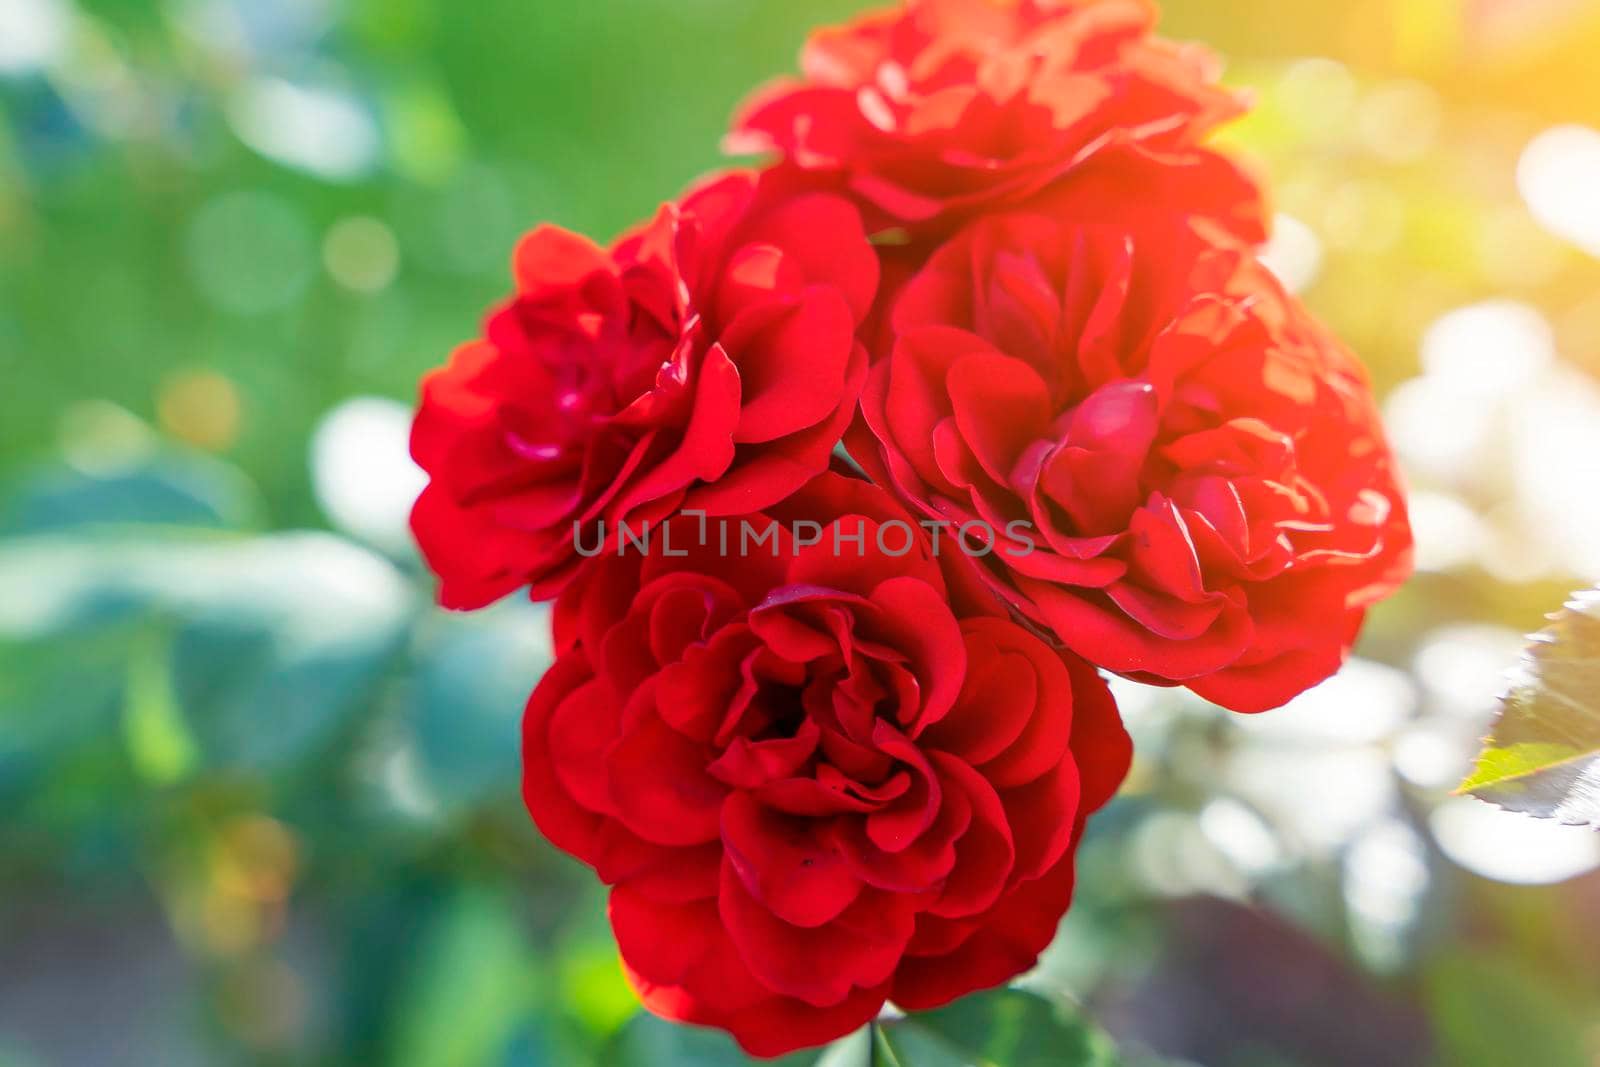 A Red Rose Bush. lots of red rosebuds close-up. The concept of gardening, floristry, landscape design